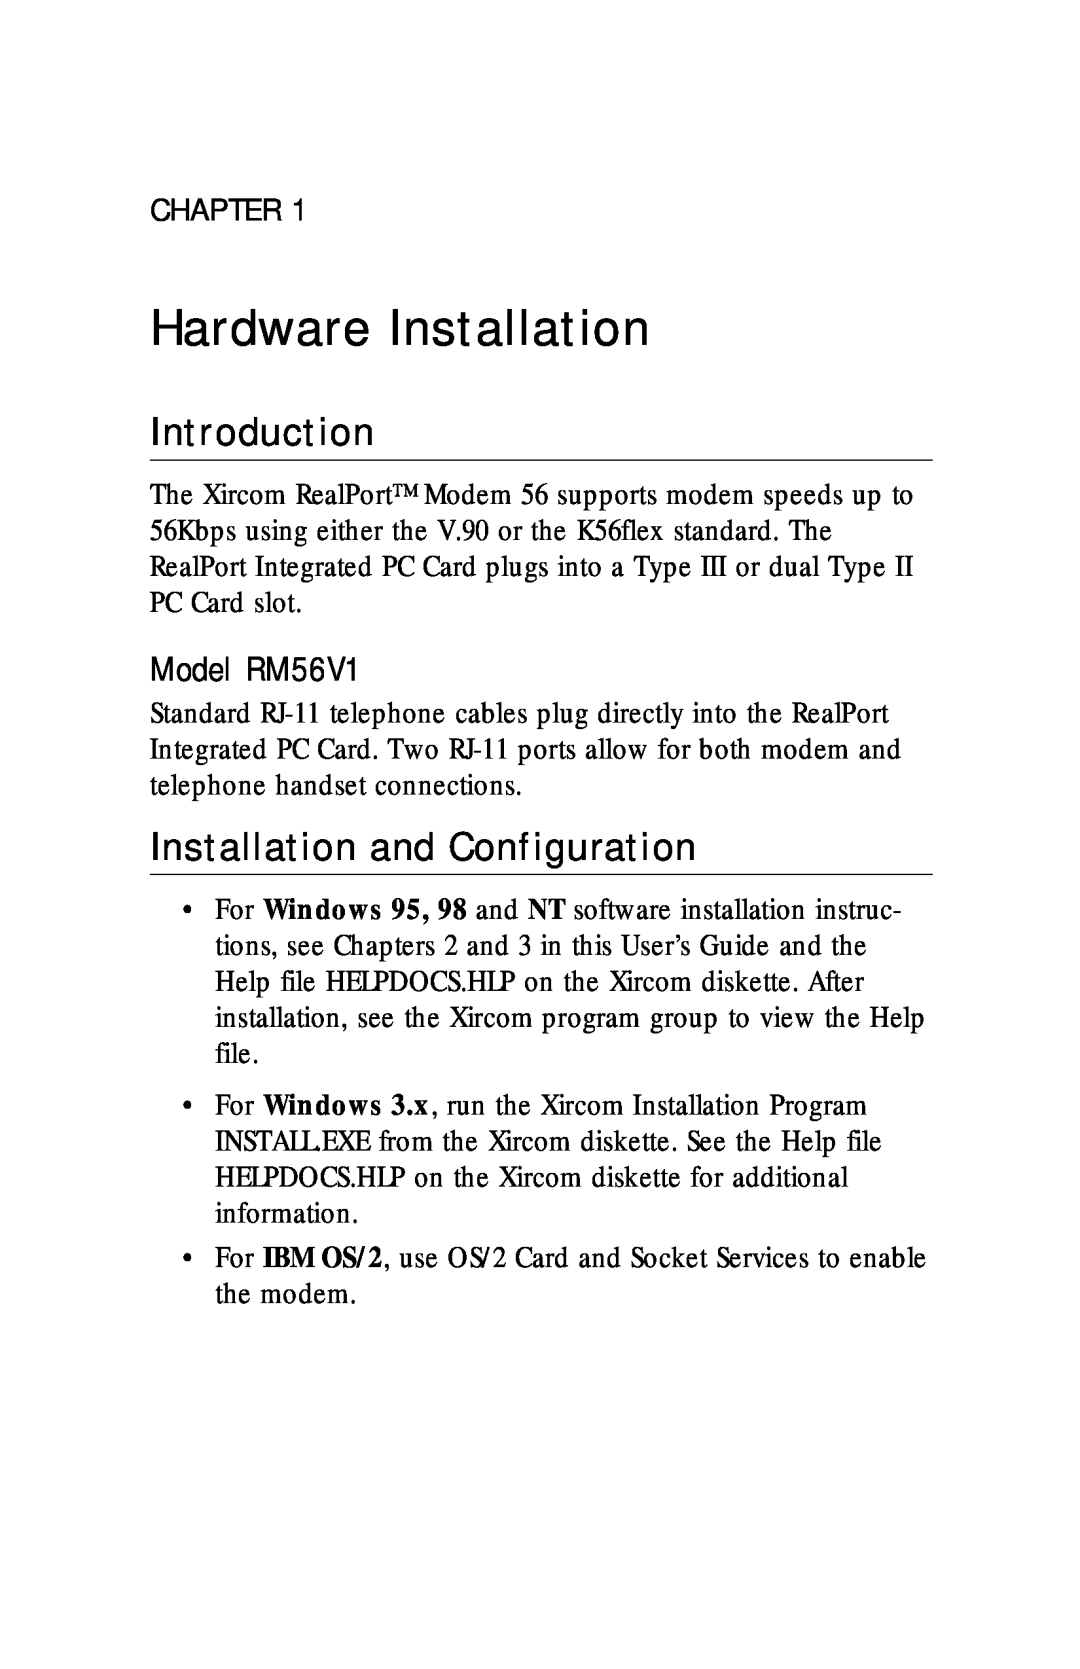 Xircom manual Hardware Installation, Introduction, Installation and Configuration, Model RM56V1 